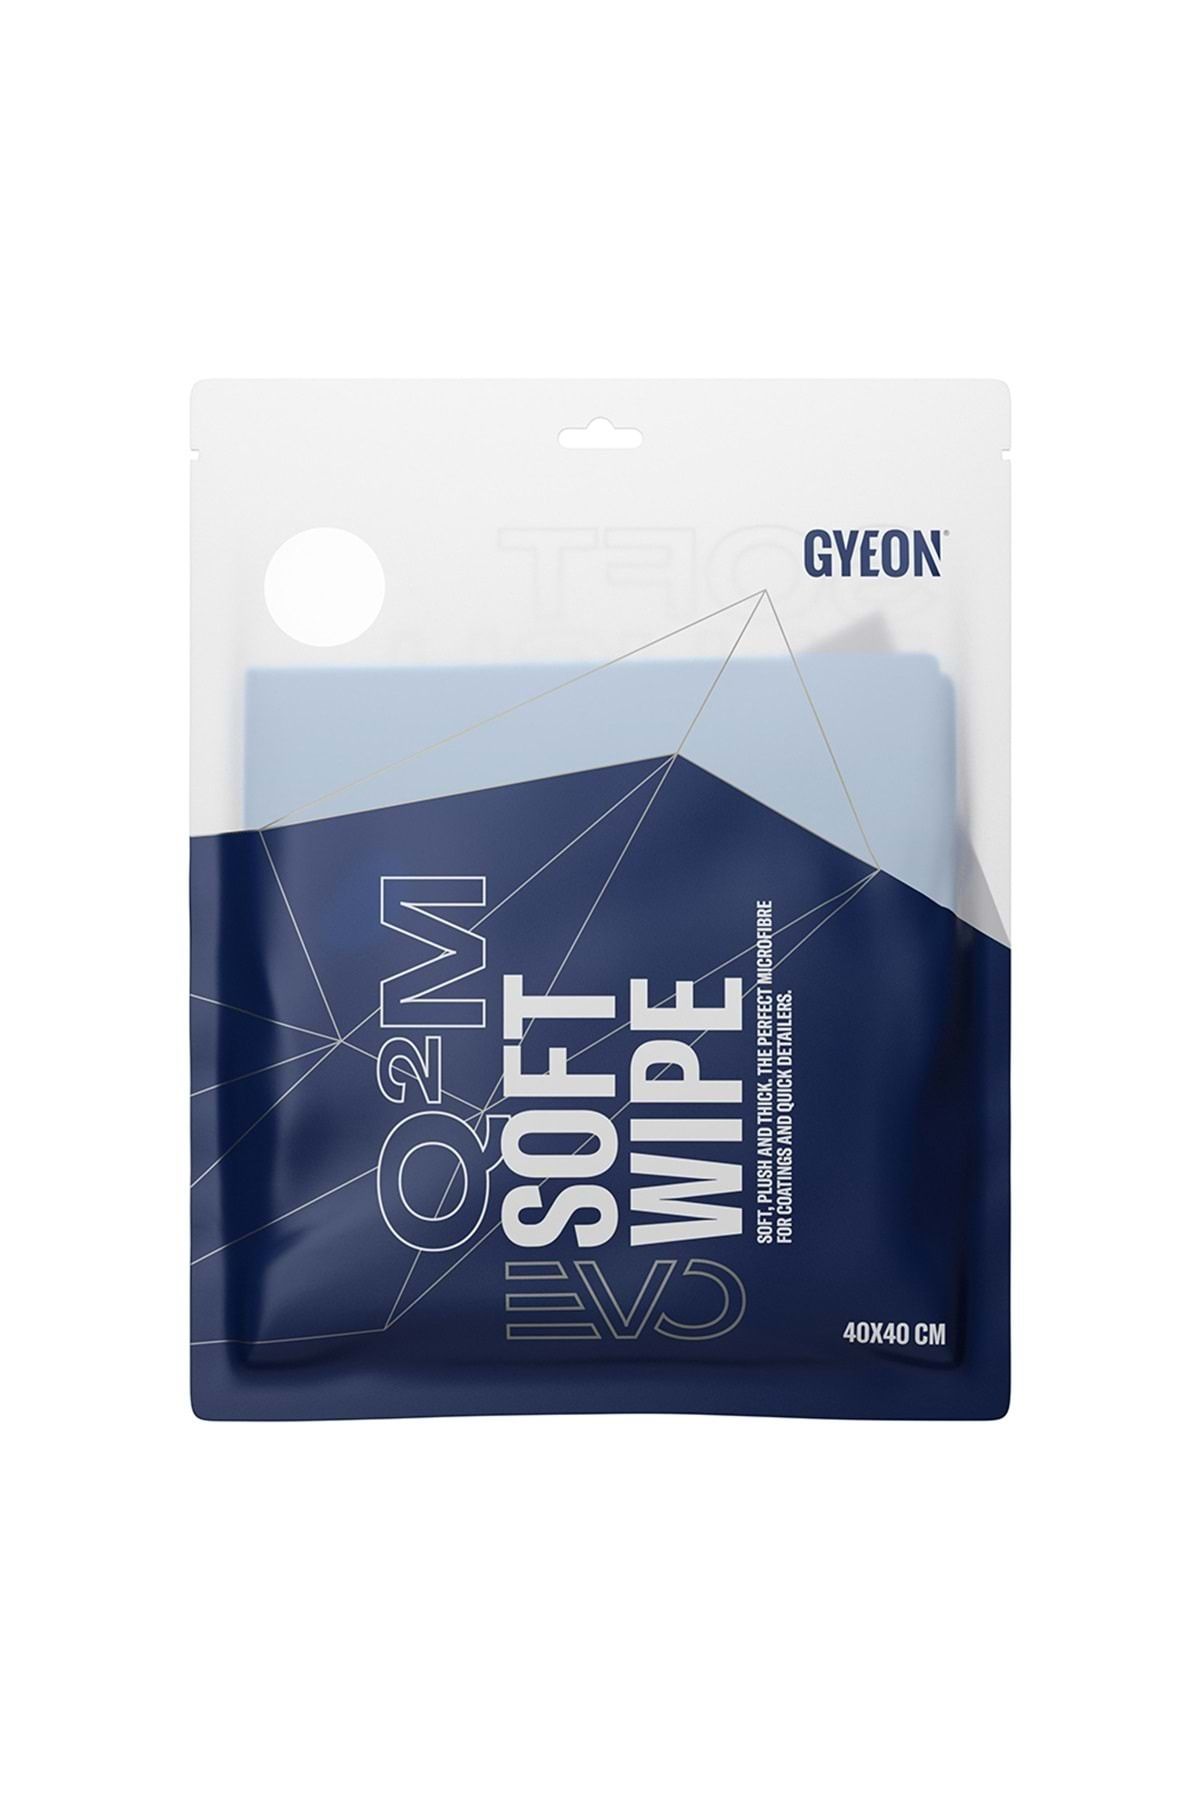 Gyeon Quartz Gyeon Q²m Softwipe Evo Lazer Kesim Peluş Pasta Cila Bezi - 40x40 Cm